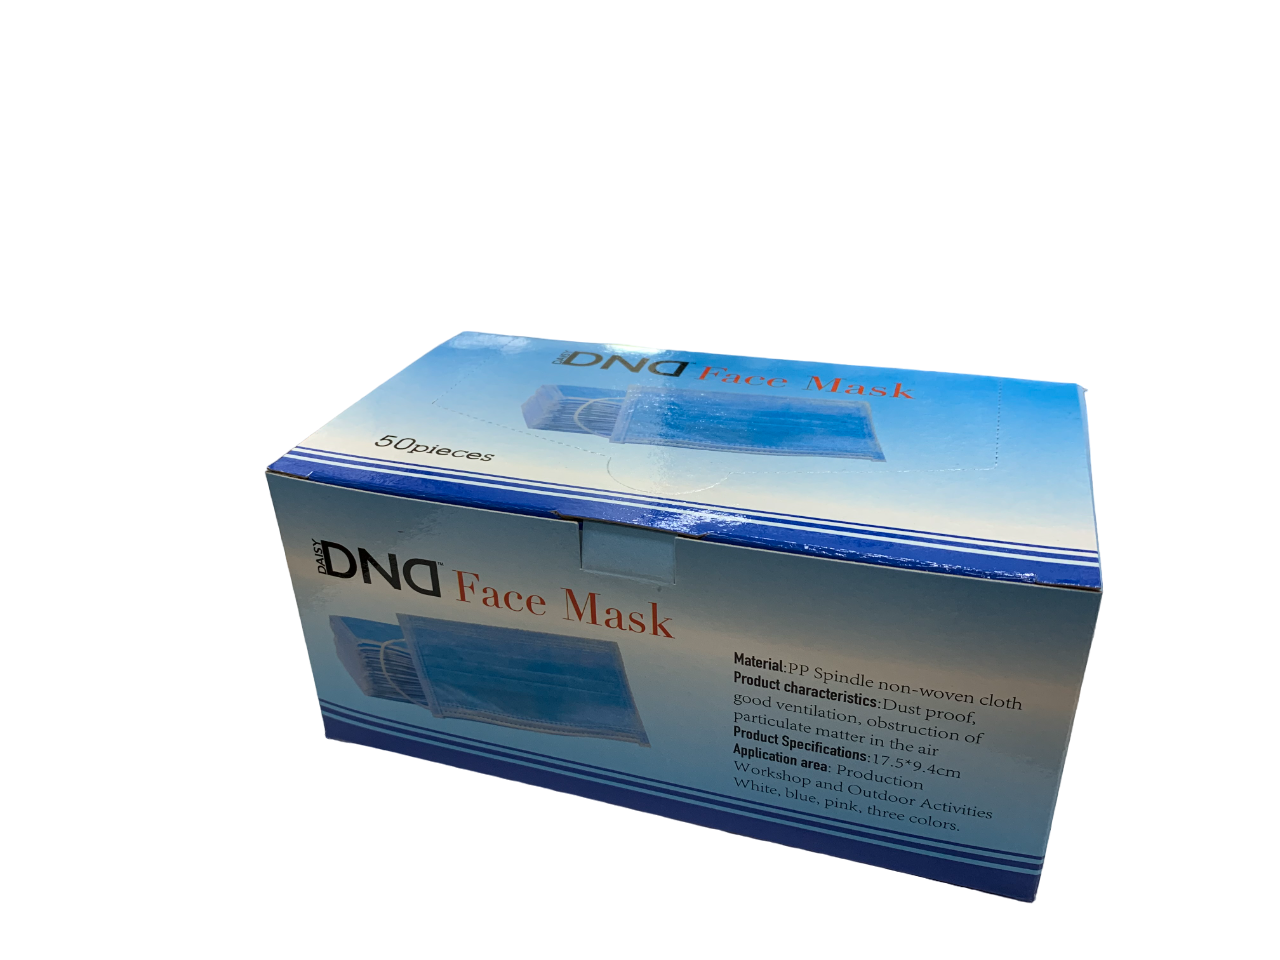 DND Face Mask